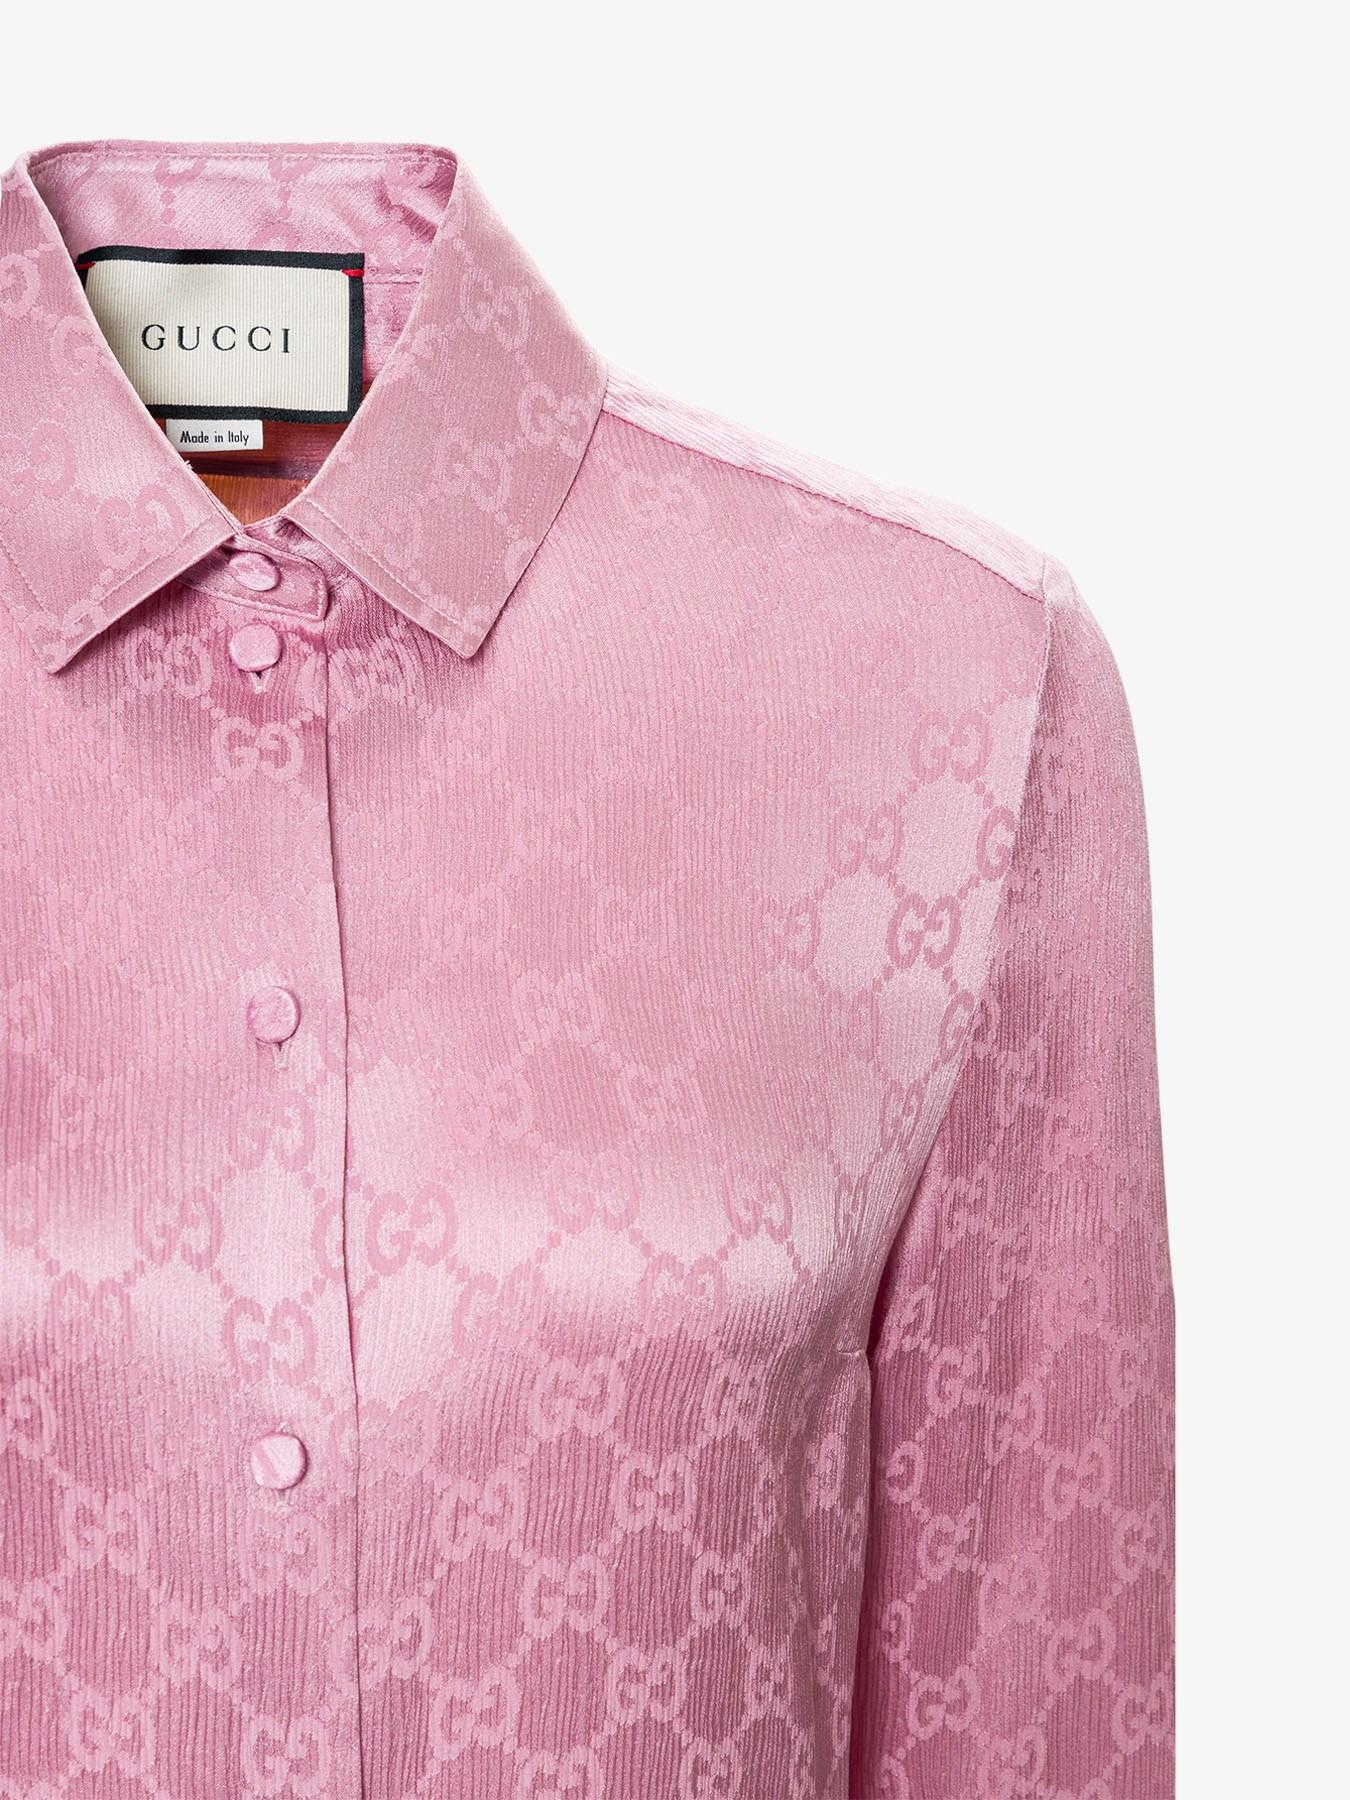 Gucci Crêpe De Chine Silk Shirt in Pink | Lyst